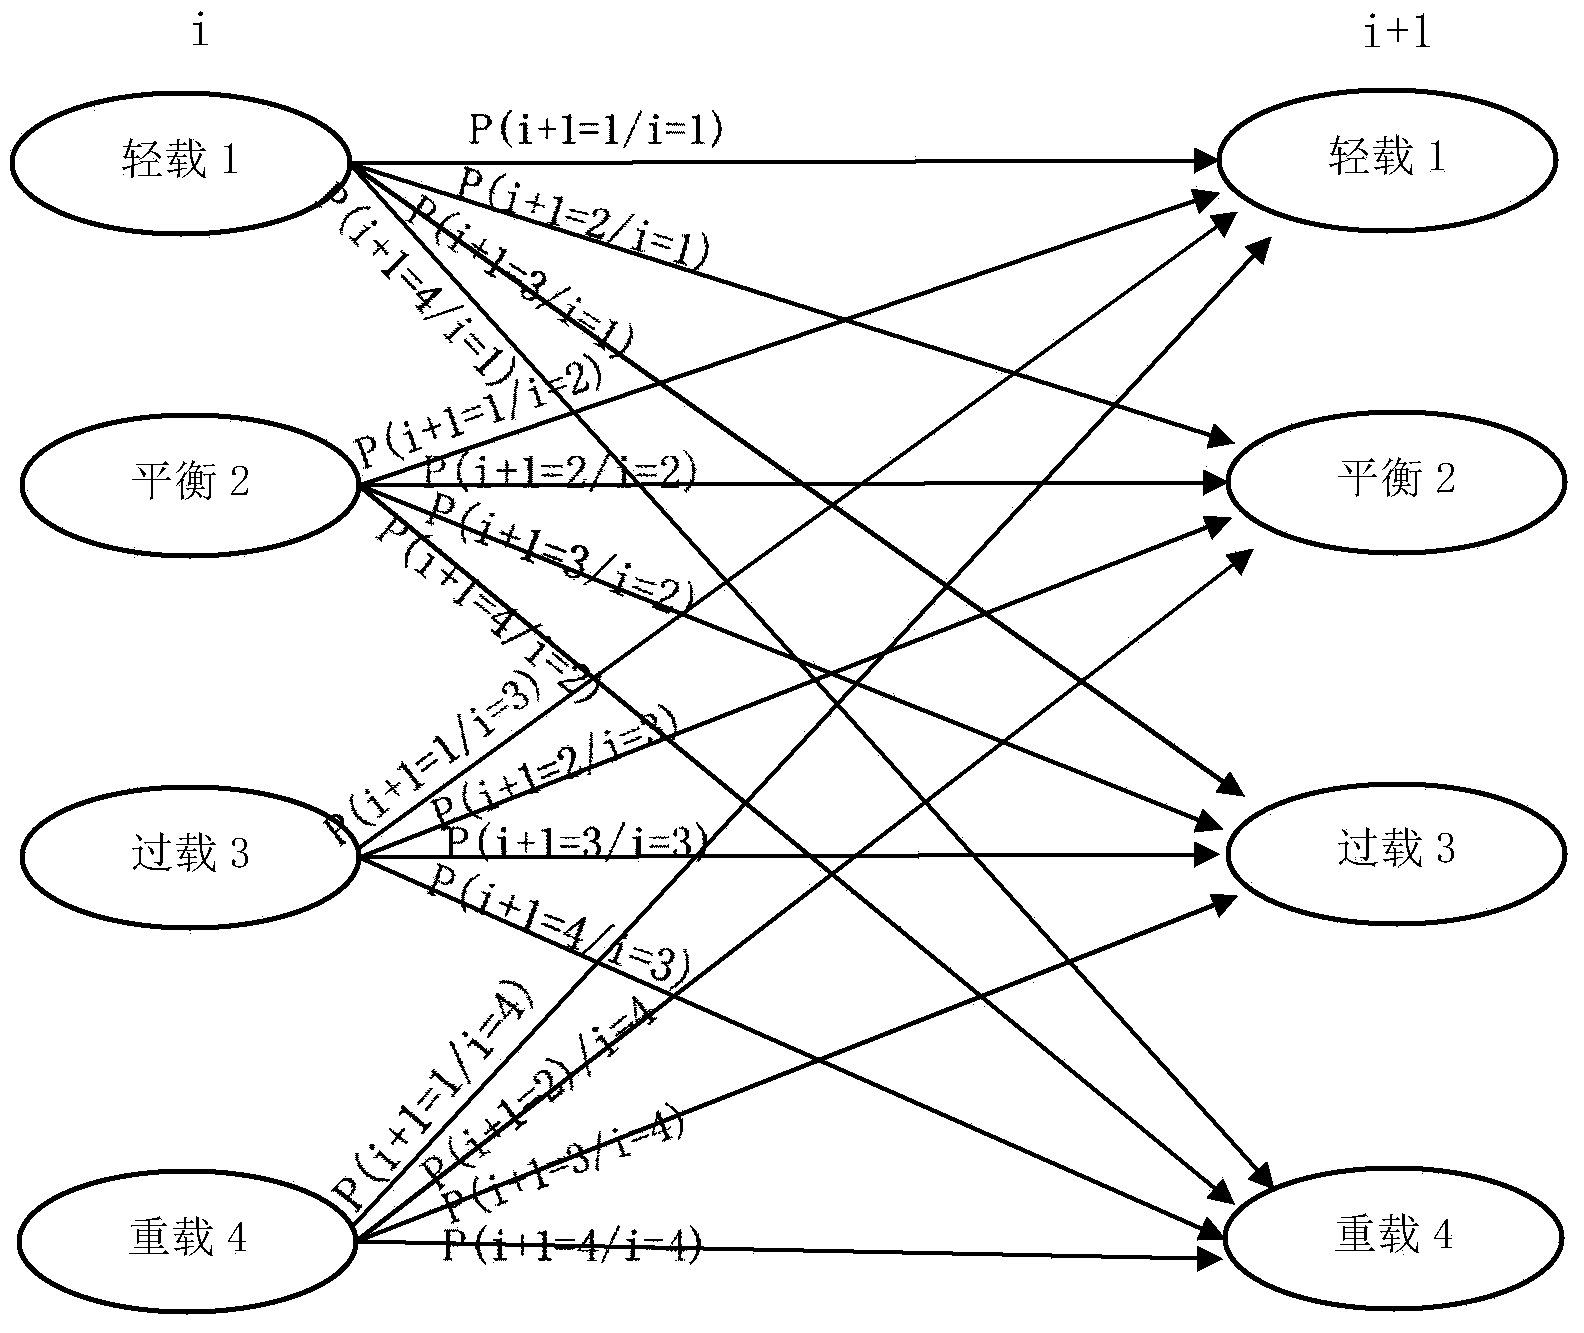 Method for self-adaptive load balancing based on future load prediction